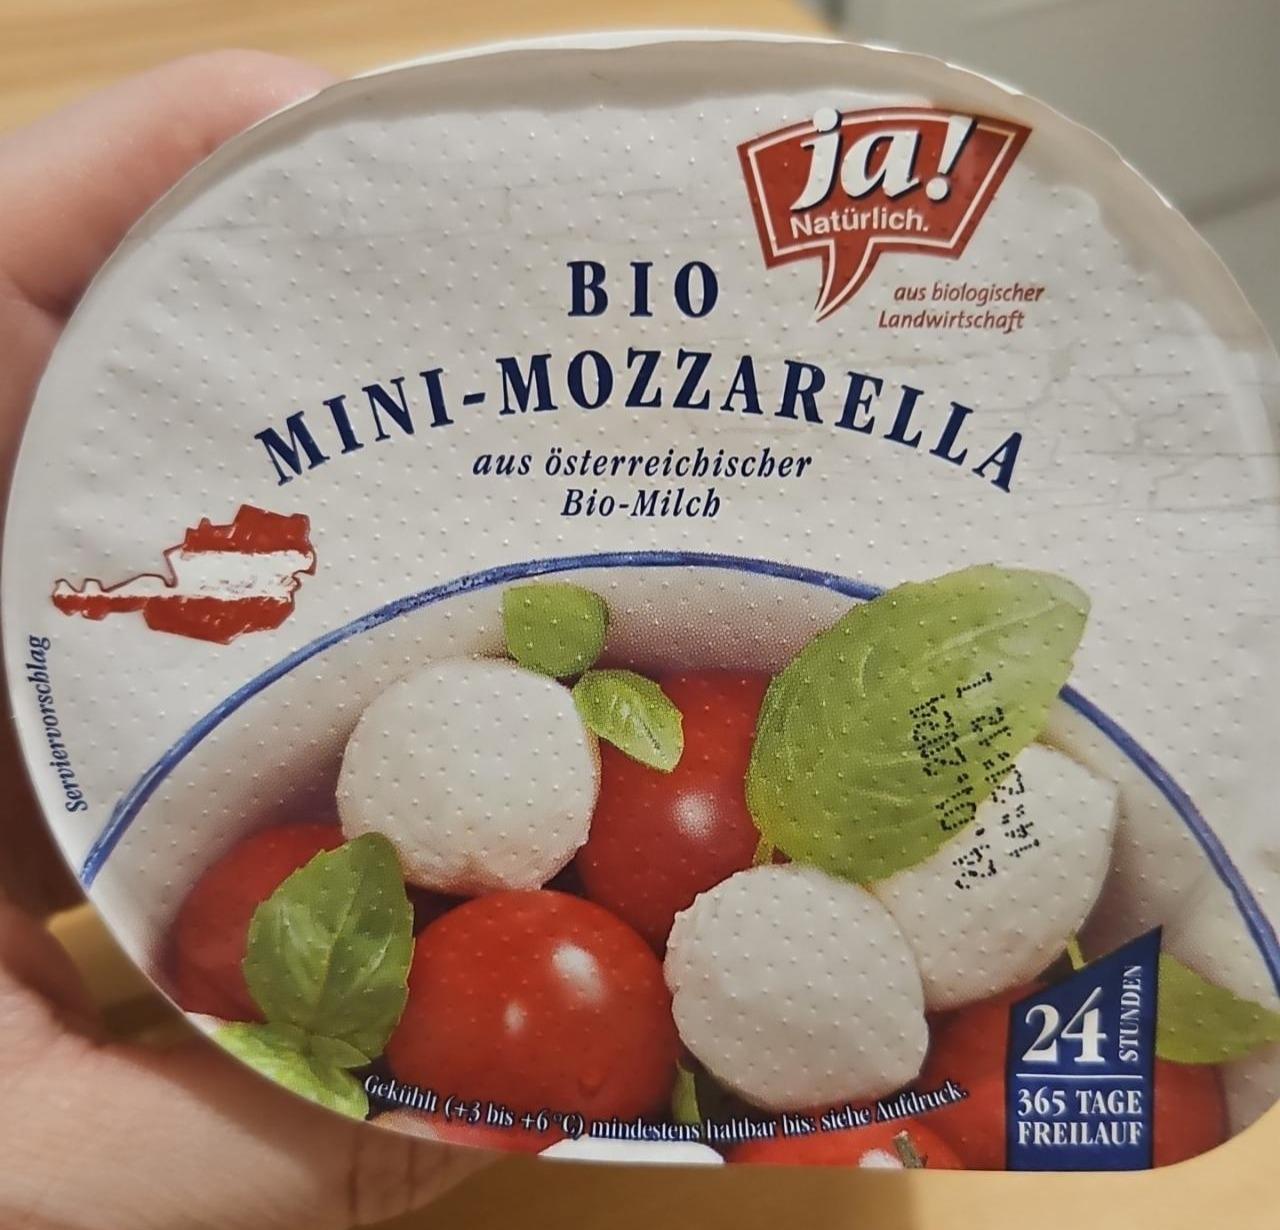 Fotografie - Bio Mini-Mozzarella ja! Natürlich.